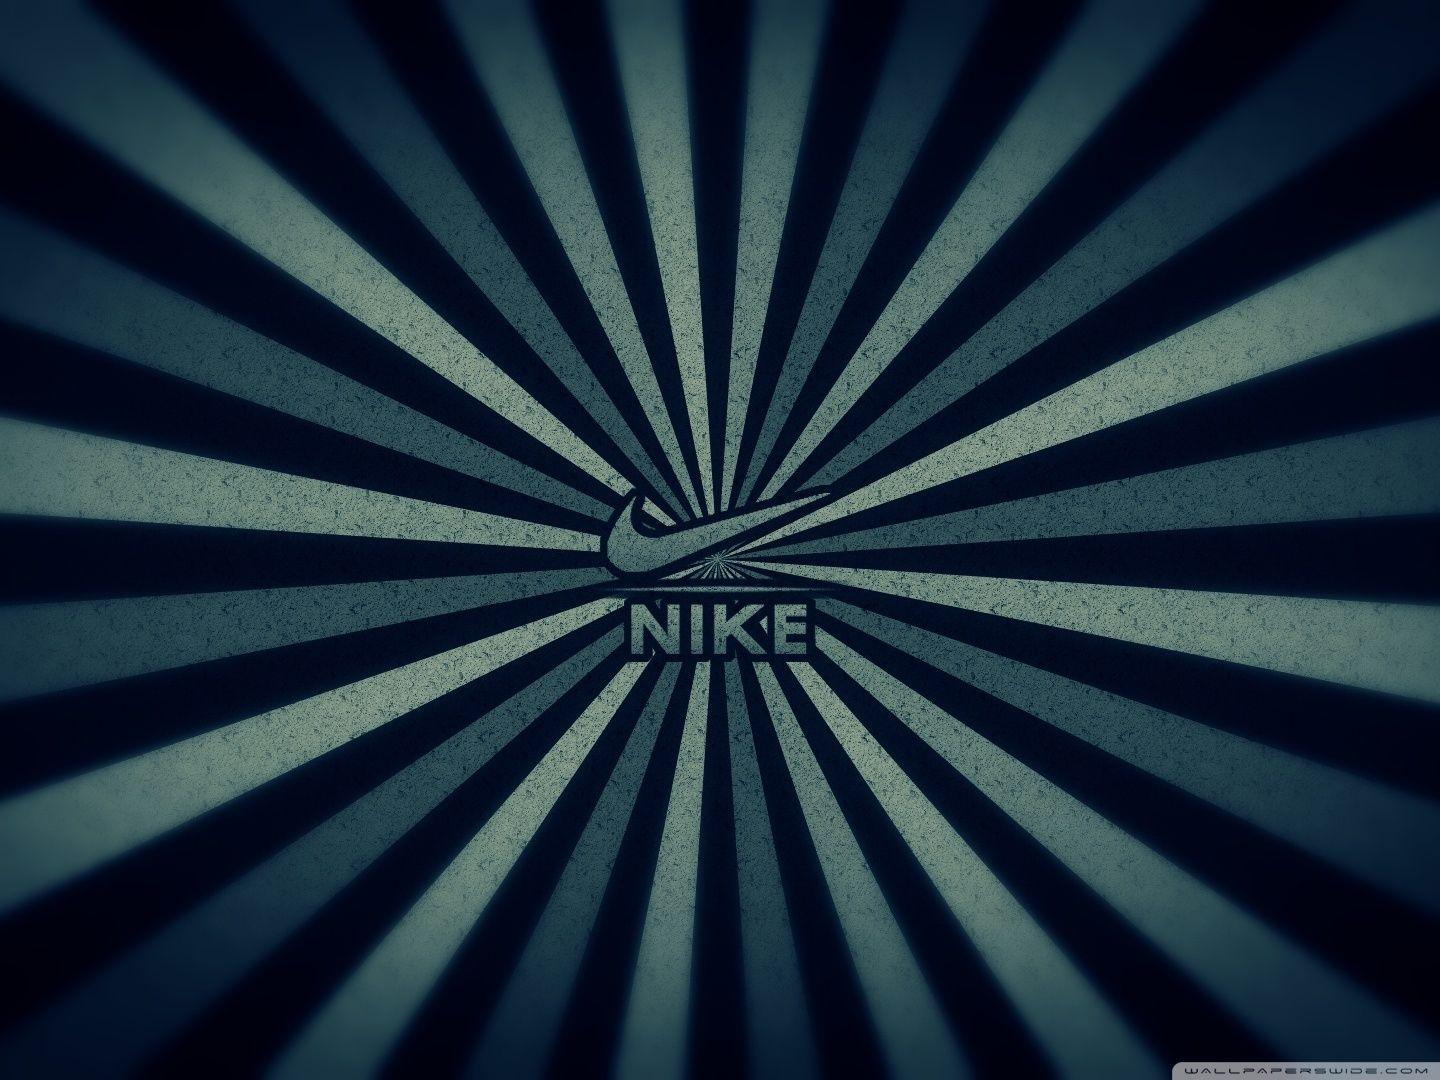 NIKE LOGO Ultra HD Desktop Background Wallpaper for 4K UHD TV